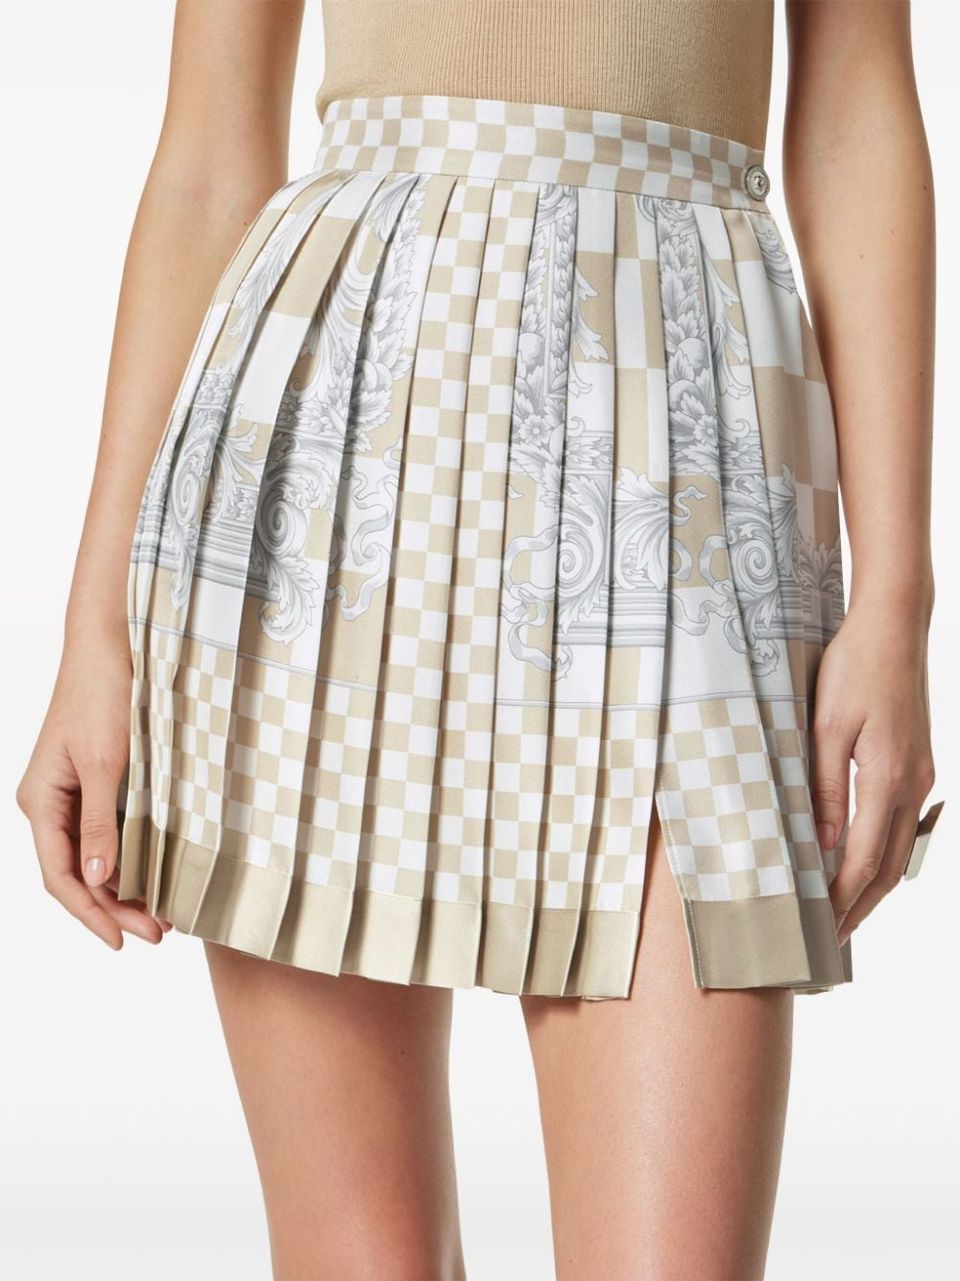 Checkered pattern skirt